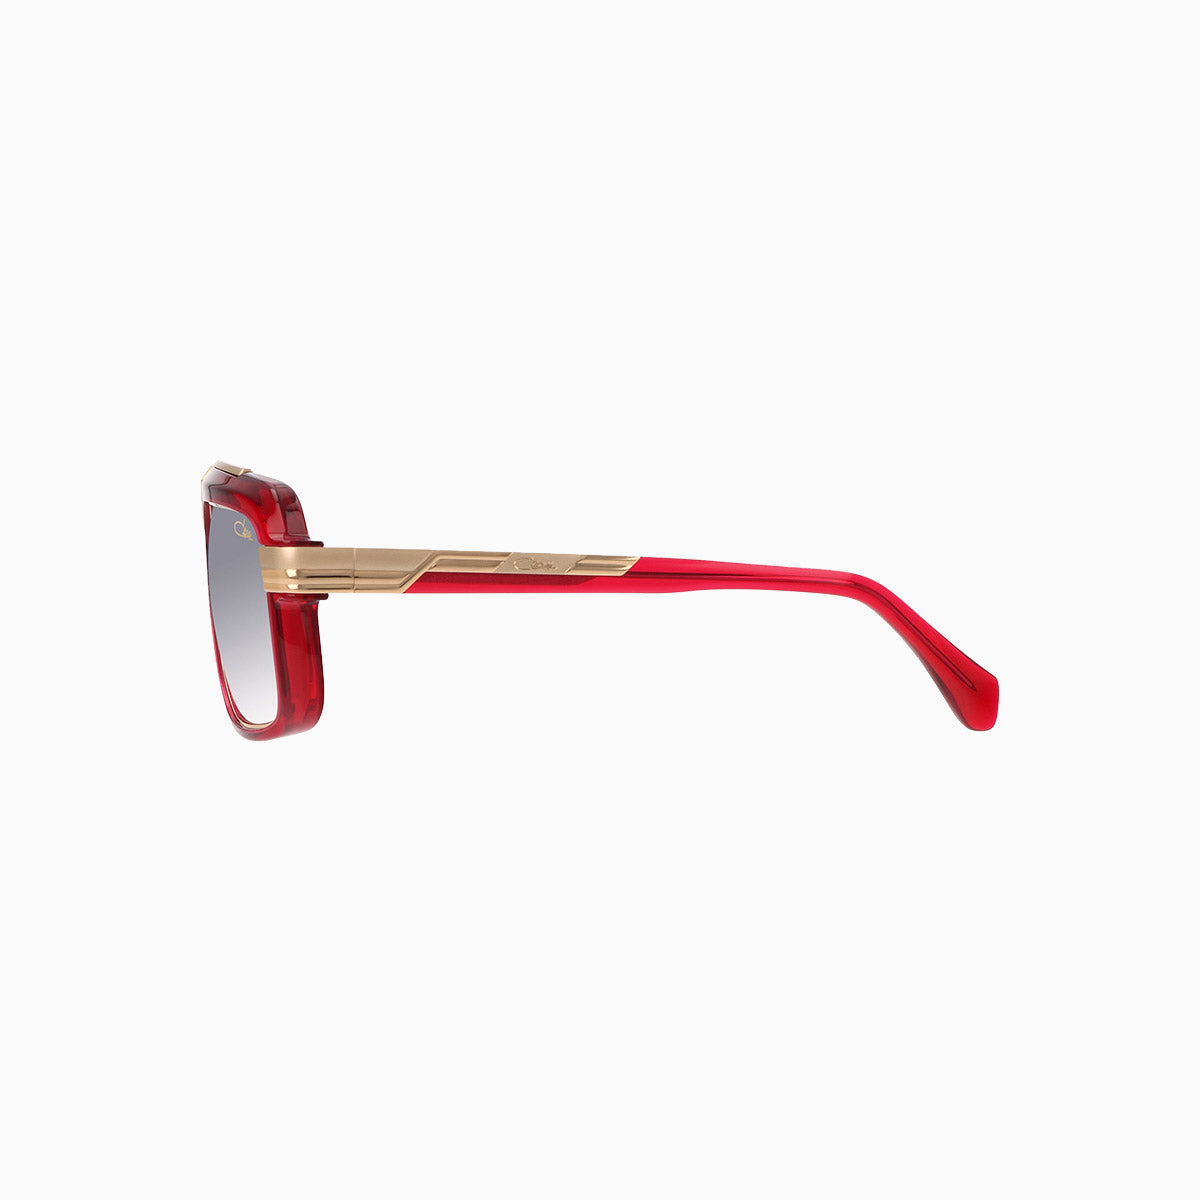 cazal-eyewear-mod-678-cazal-red-gold-sunglasses-678-004